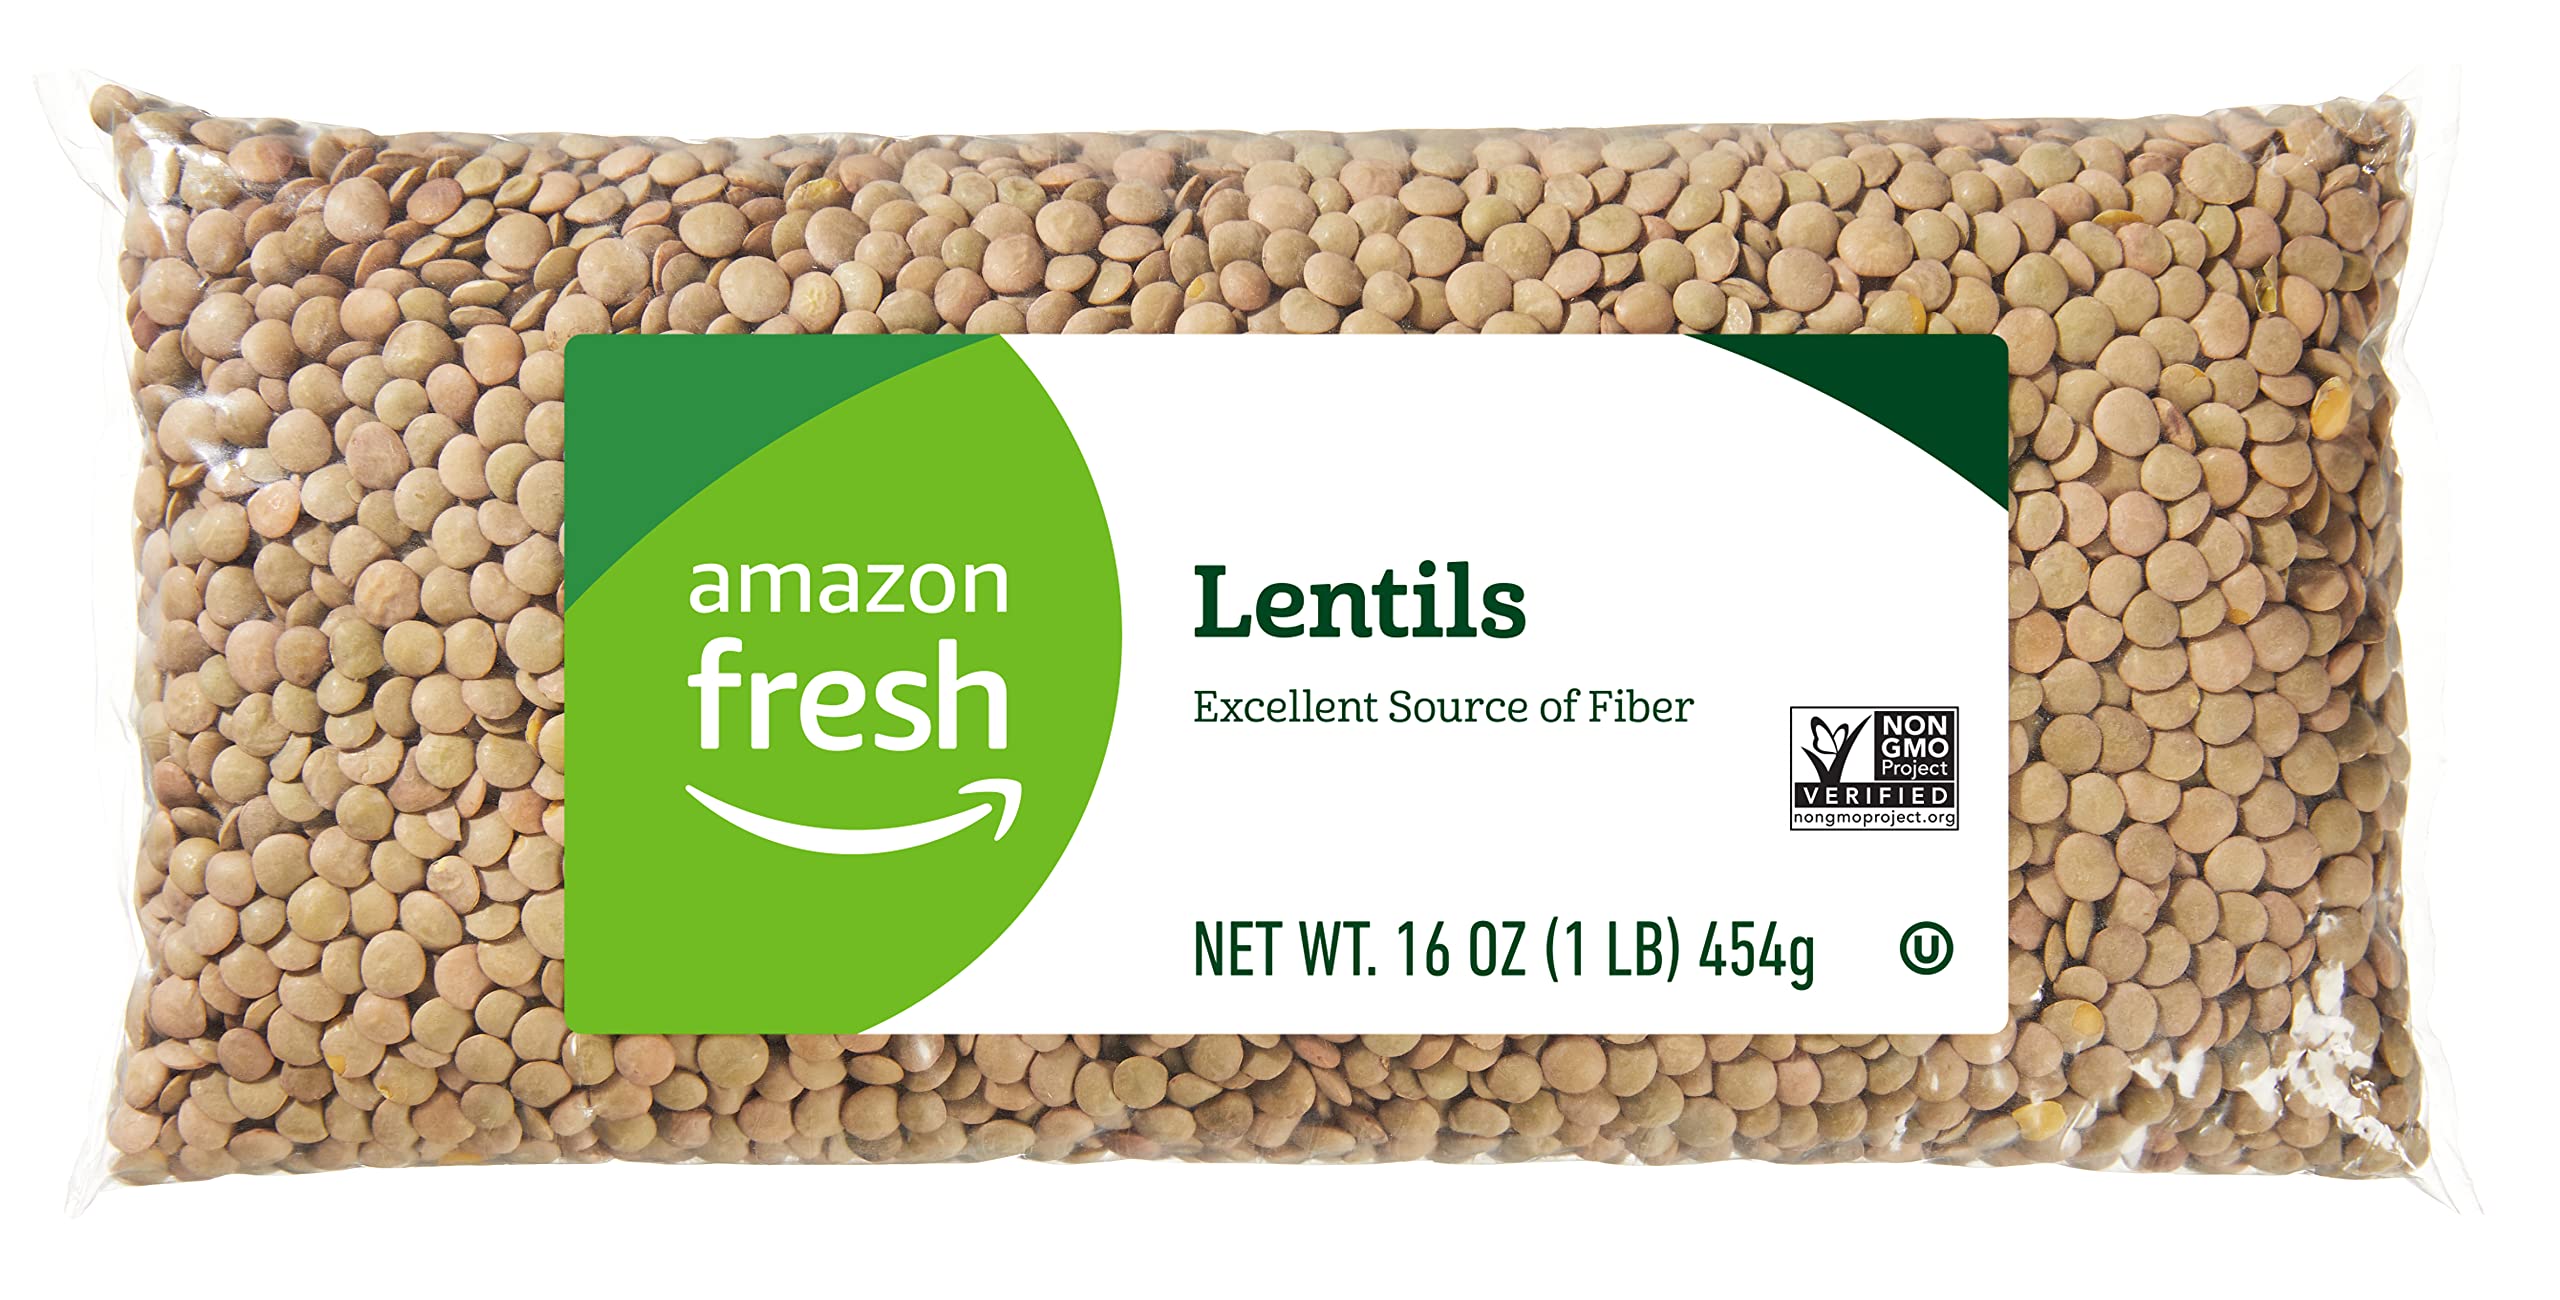 Amazon Fresh Lentils